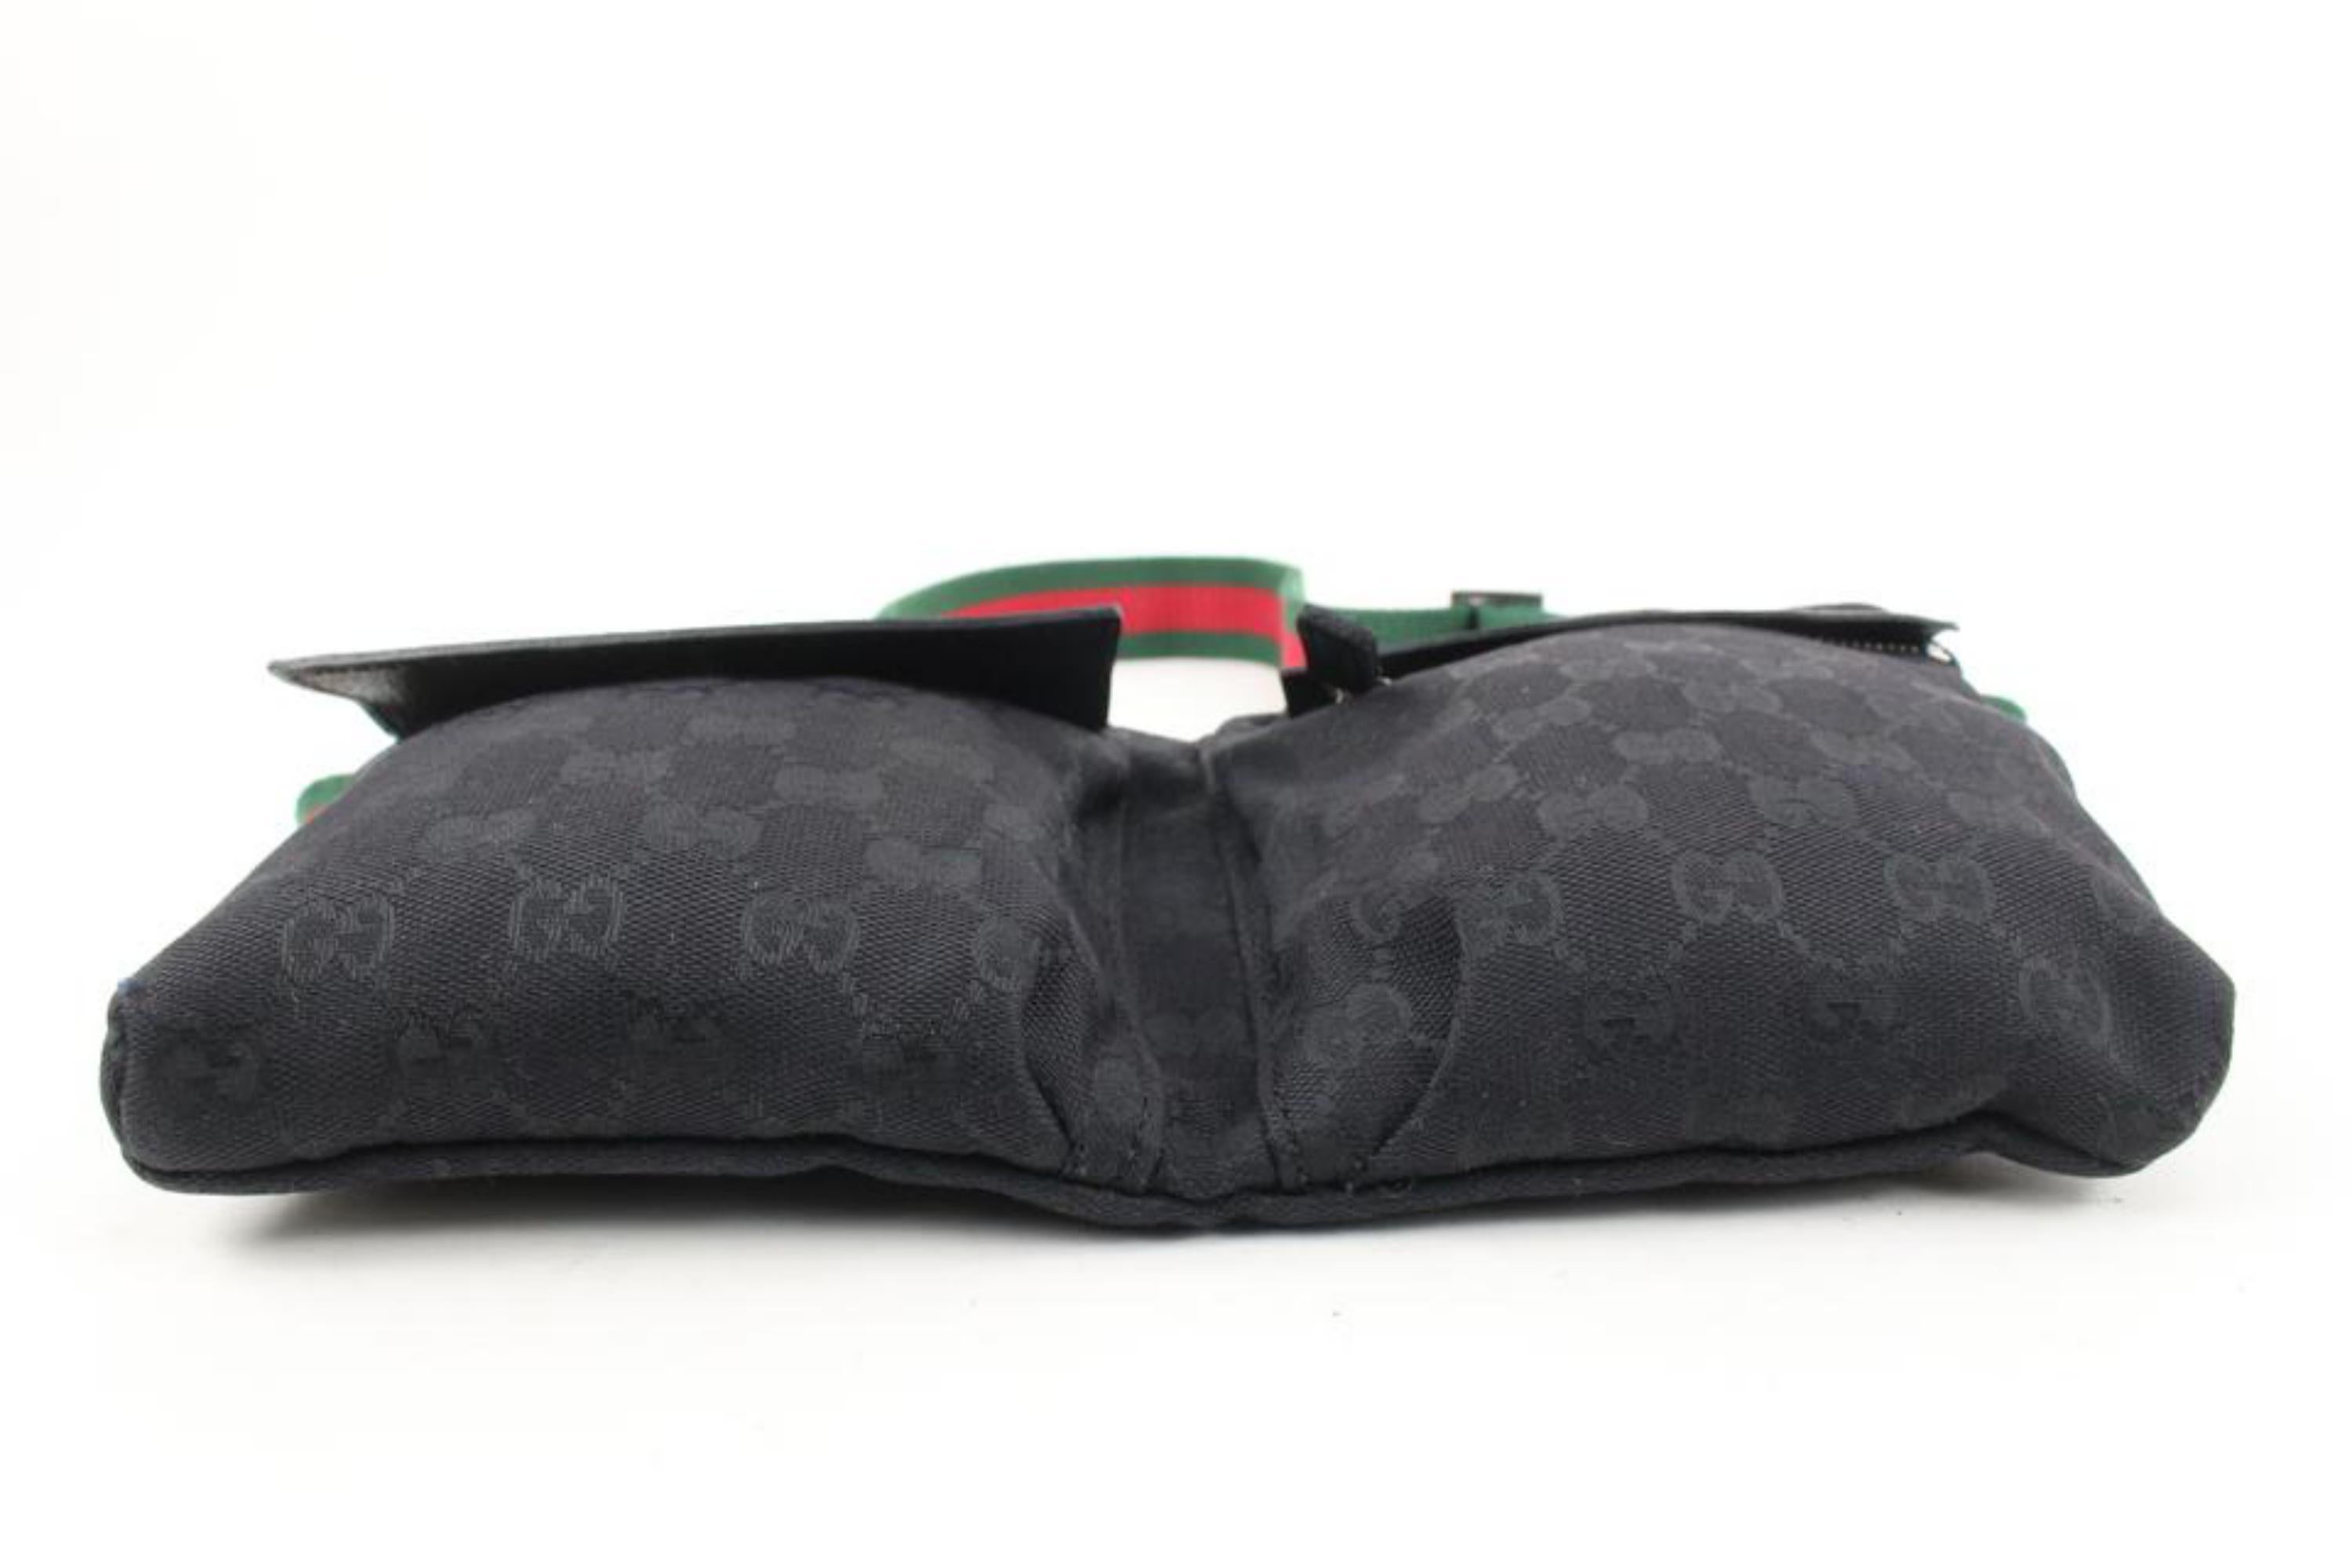 Gucci Rare Discontinued Black Monogram GG Web Belt Bag Fanny Pack 22g131s 2